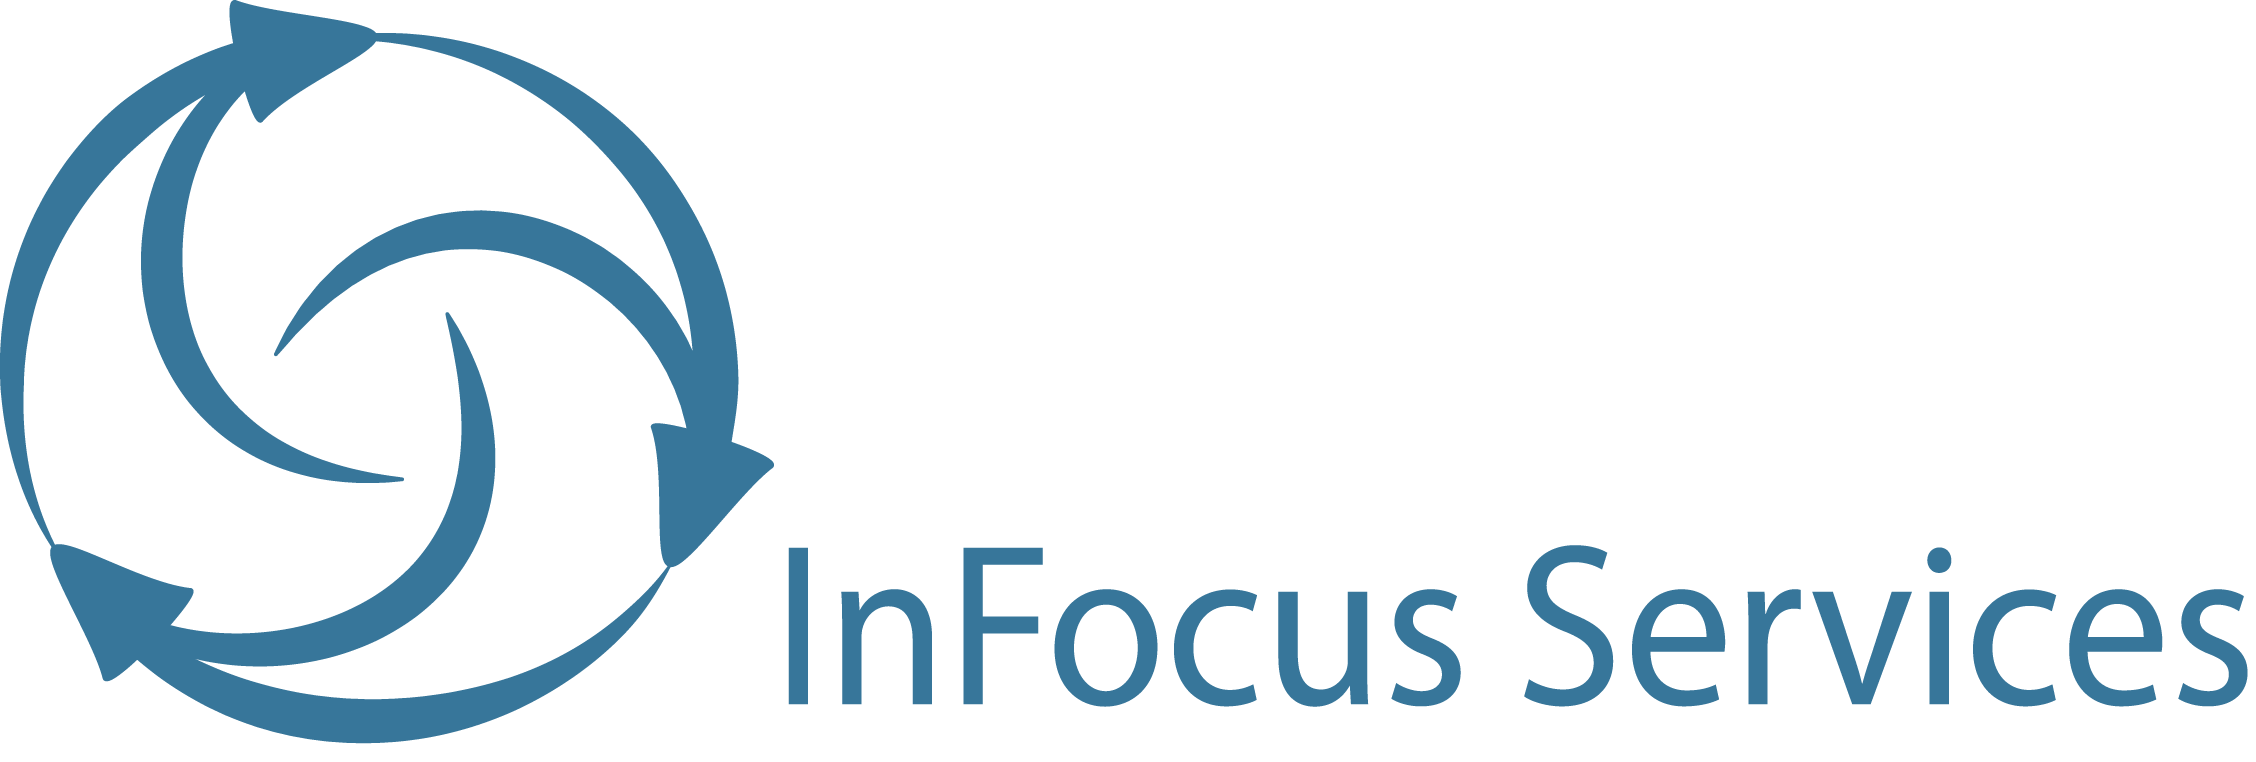 Services Logo - Home Page | InFocus Services